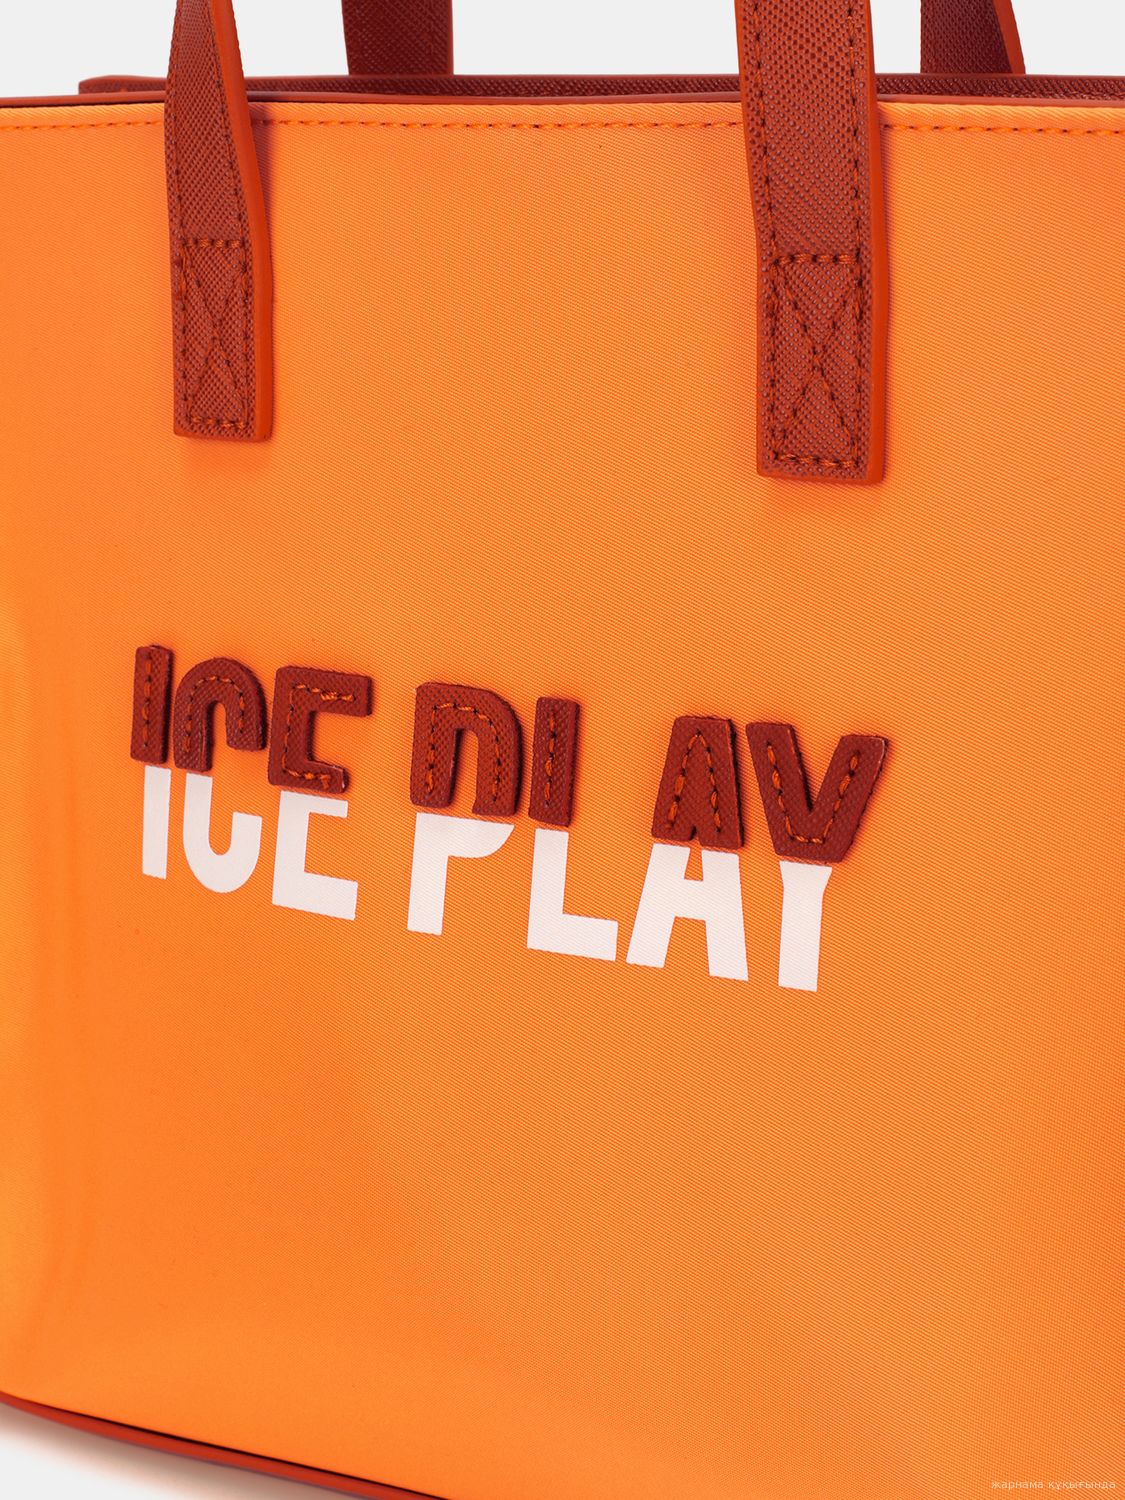 Ice Play Сумка